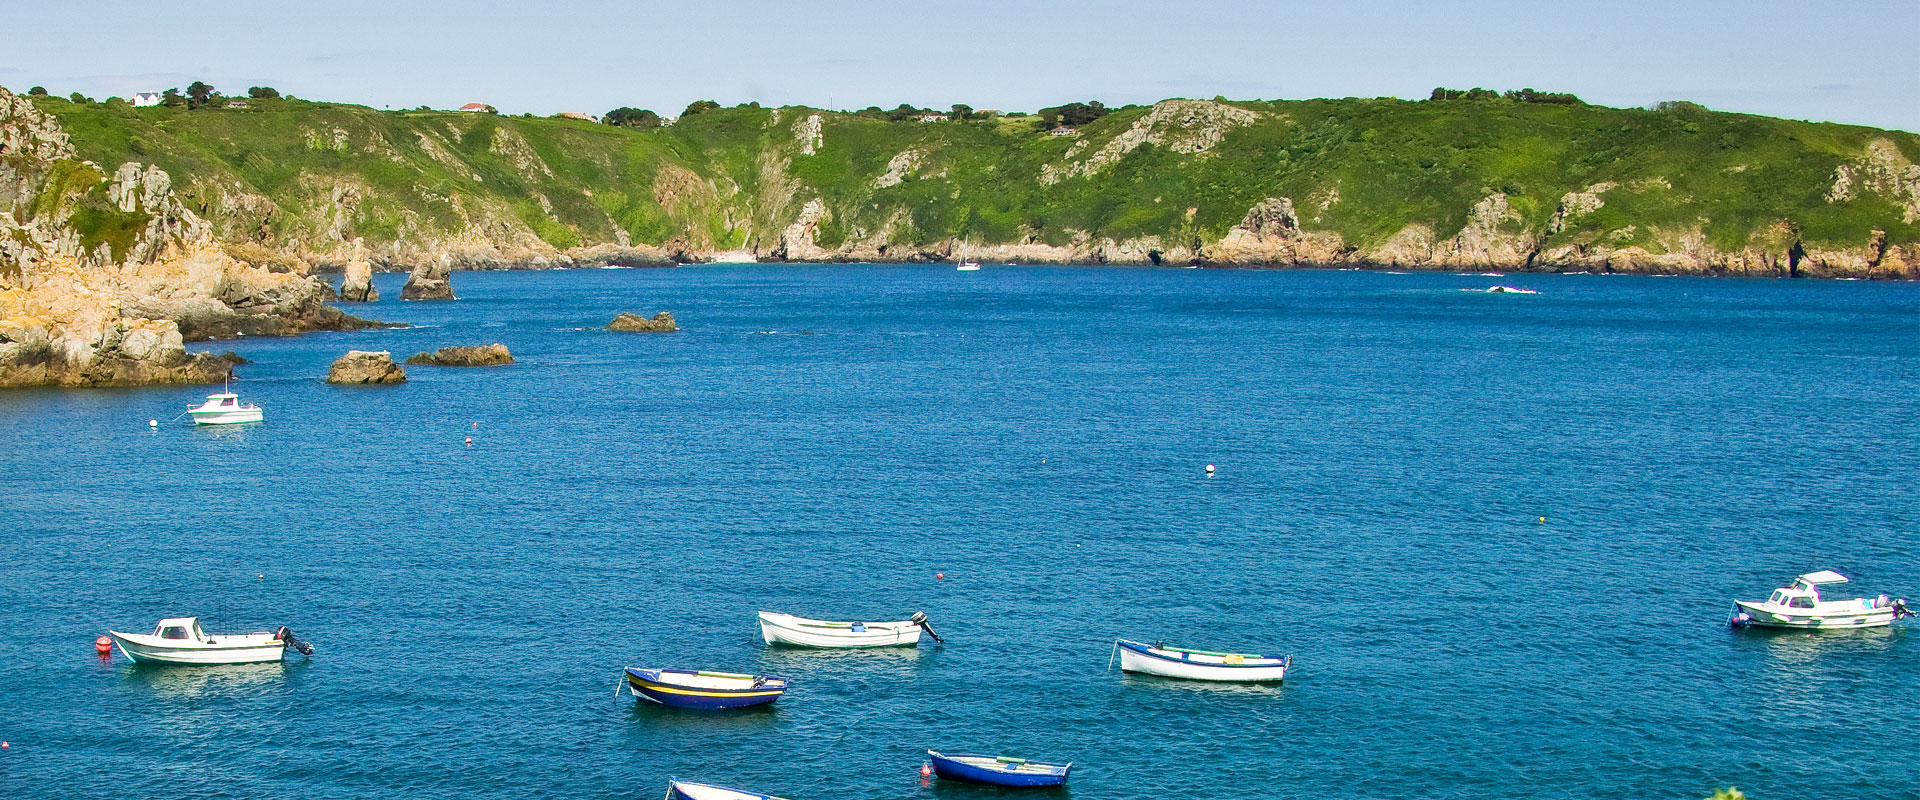 South coast - Images courtesy of VisitGuernsey